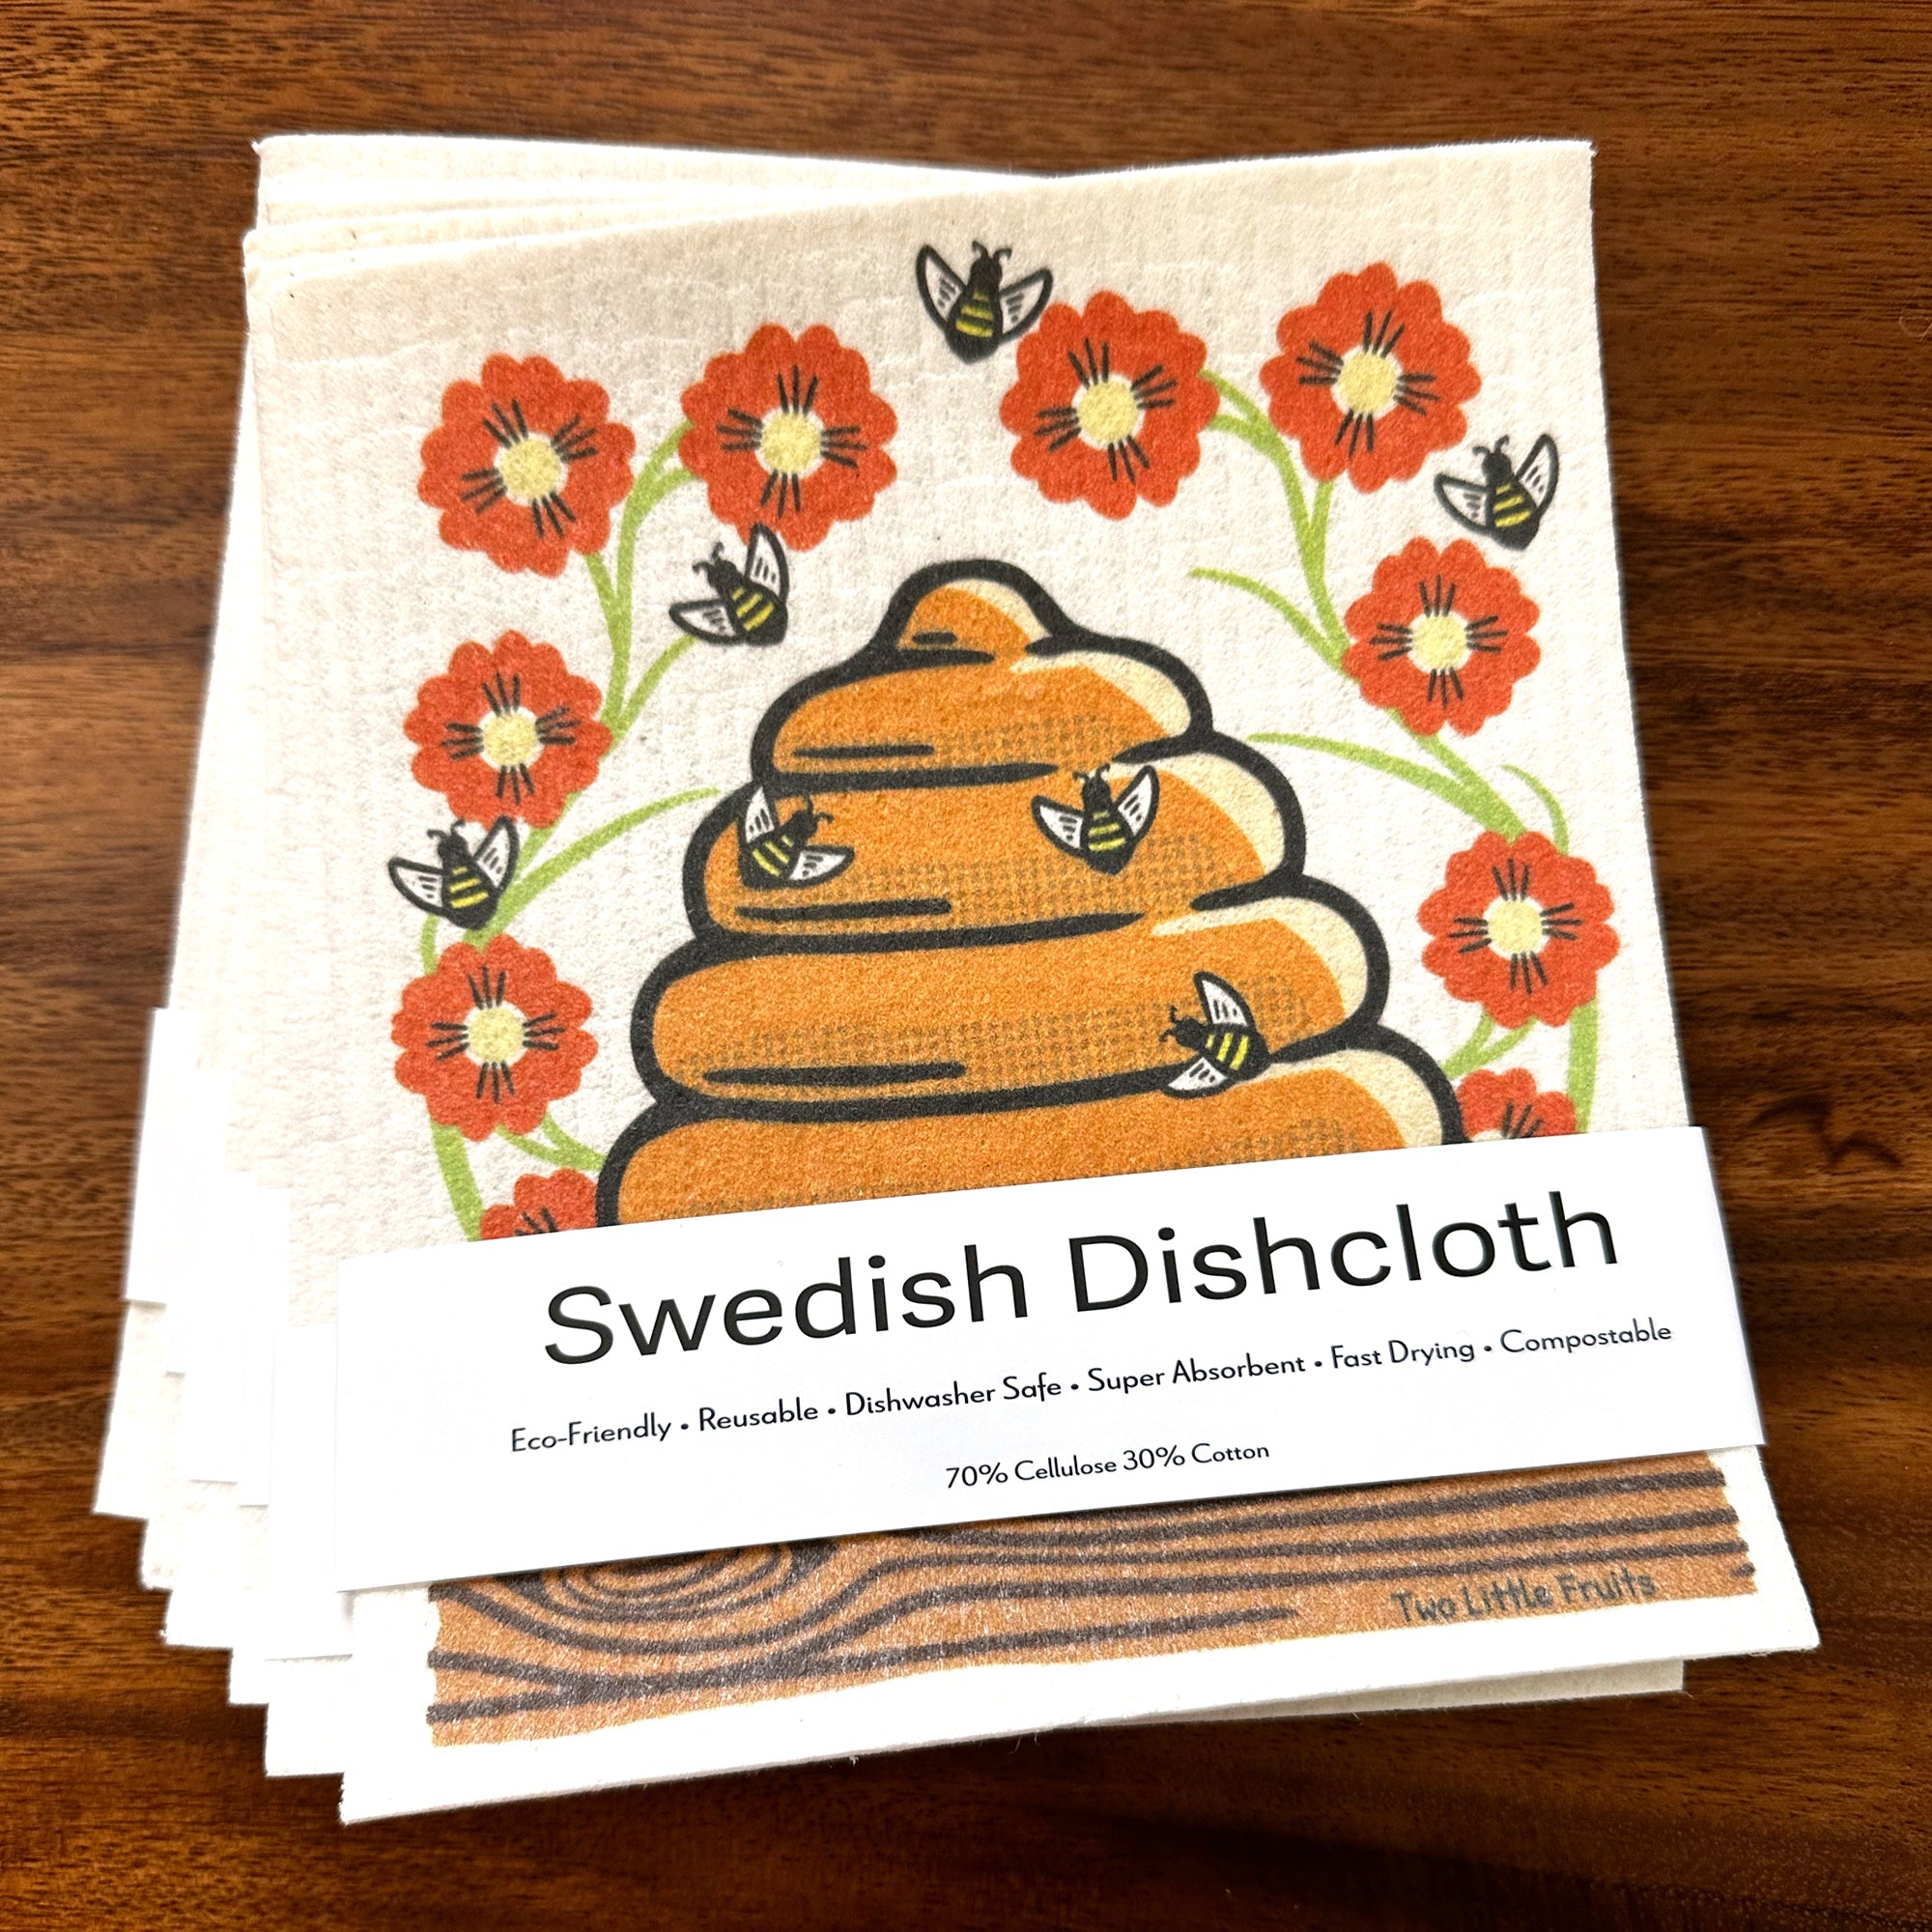 Honeybee Swedish Dishcloth - Swedish Dish Cloth - Two Little Fruits - Two Little Fruits